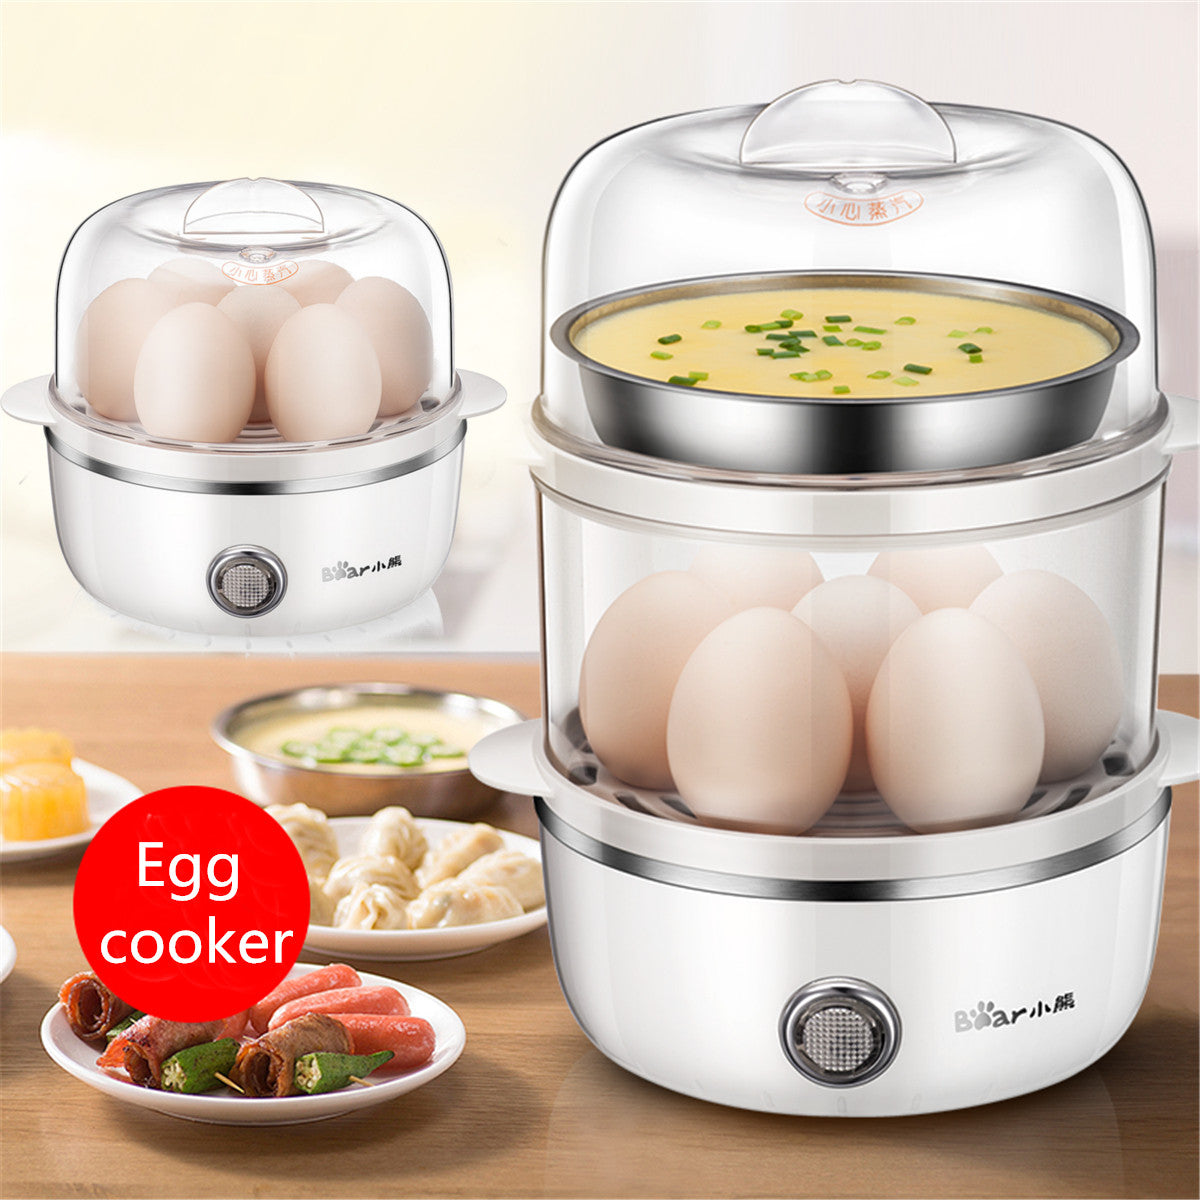 14 Egg Boiler Multifunction Electric Cooker Steamer Home Kitchen Breakfast Maker